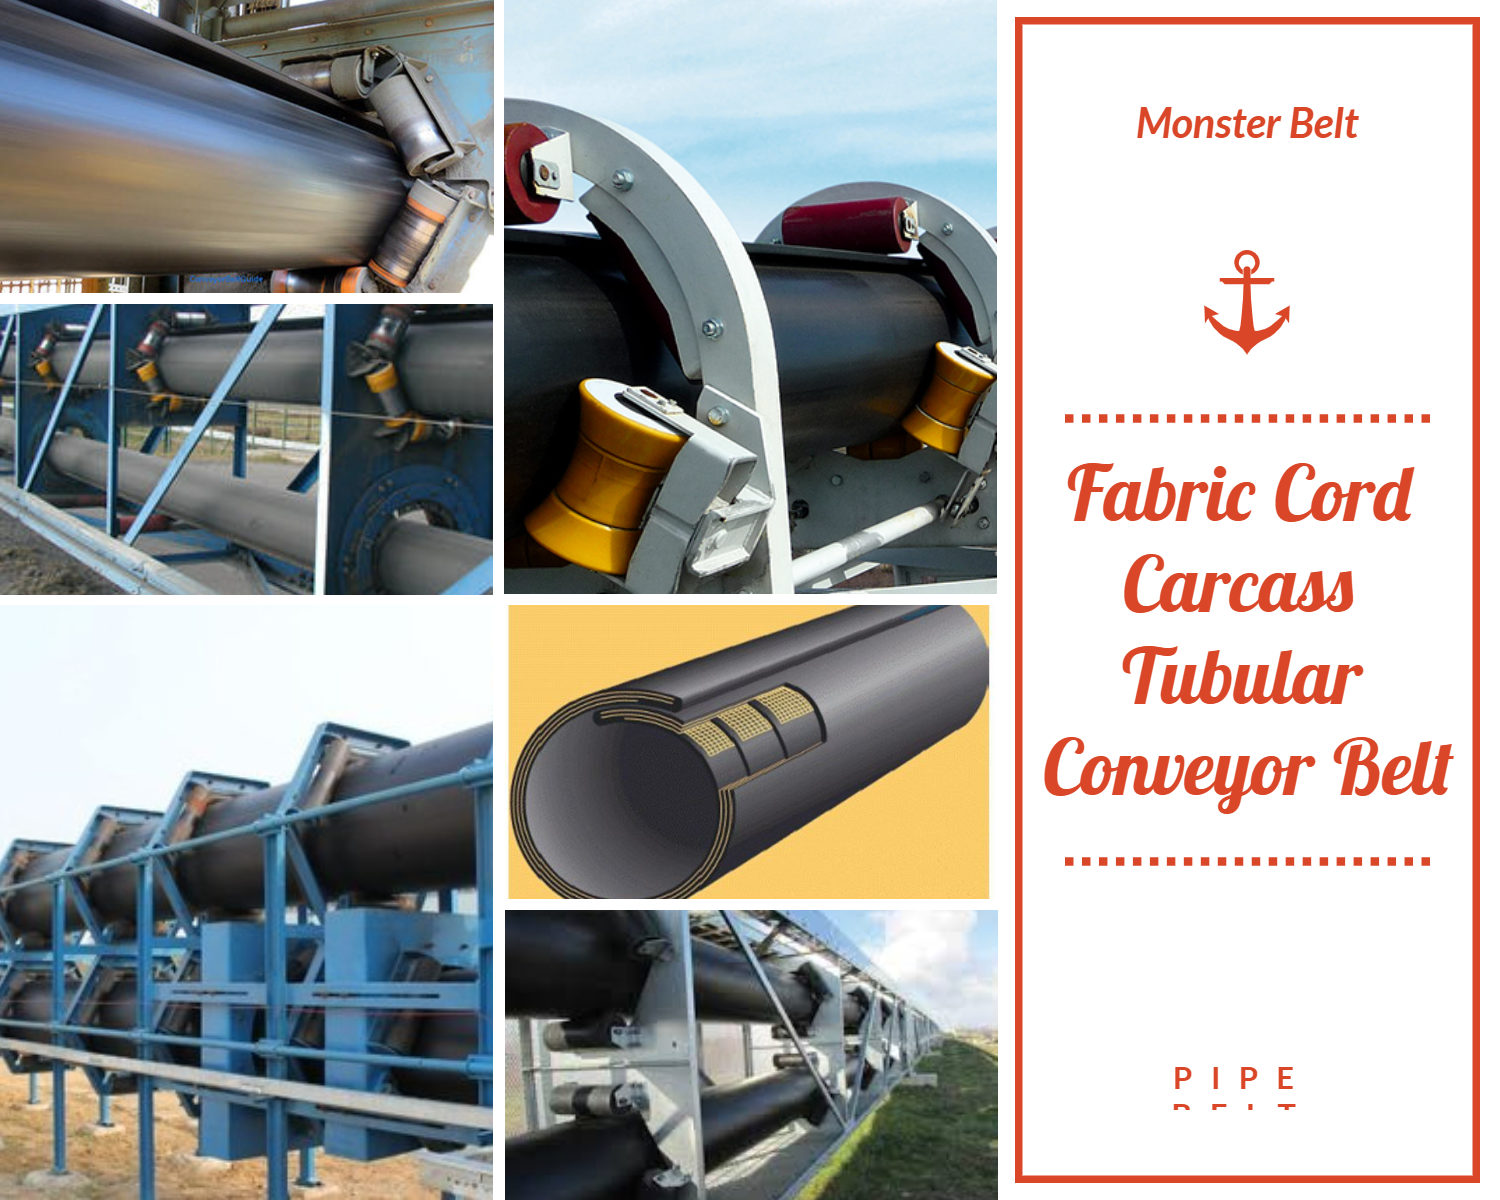 Fabric Cord Carcass Tubular Conveyor Belt